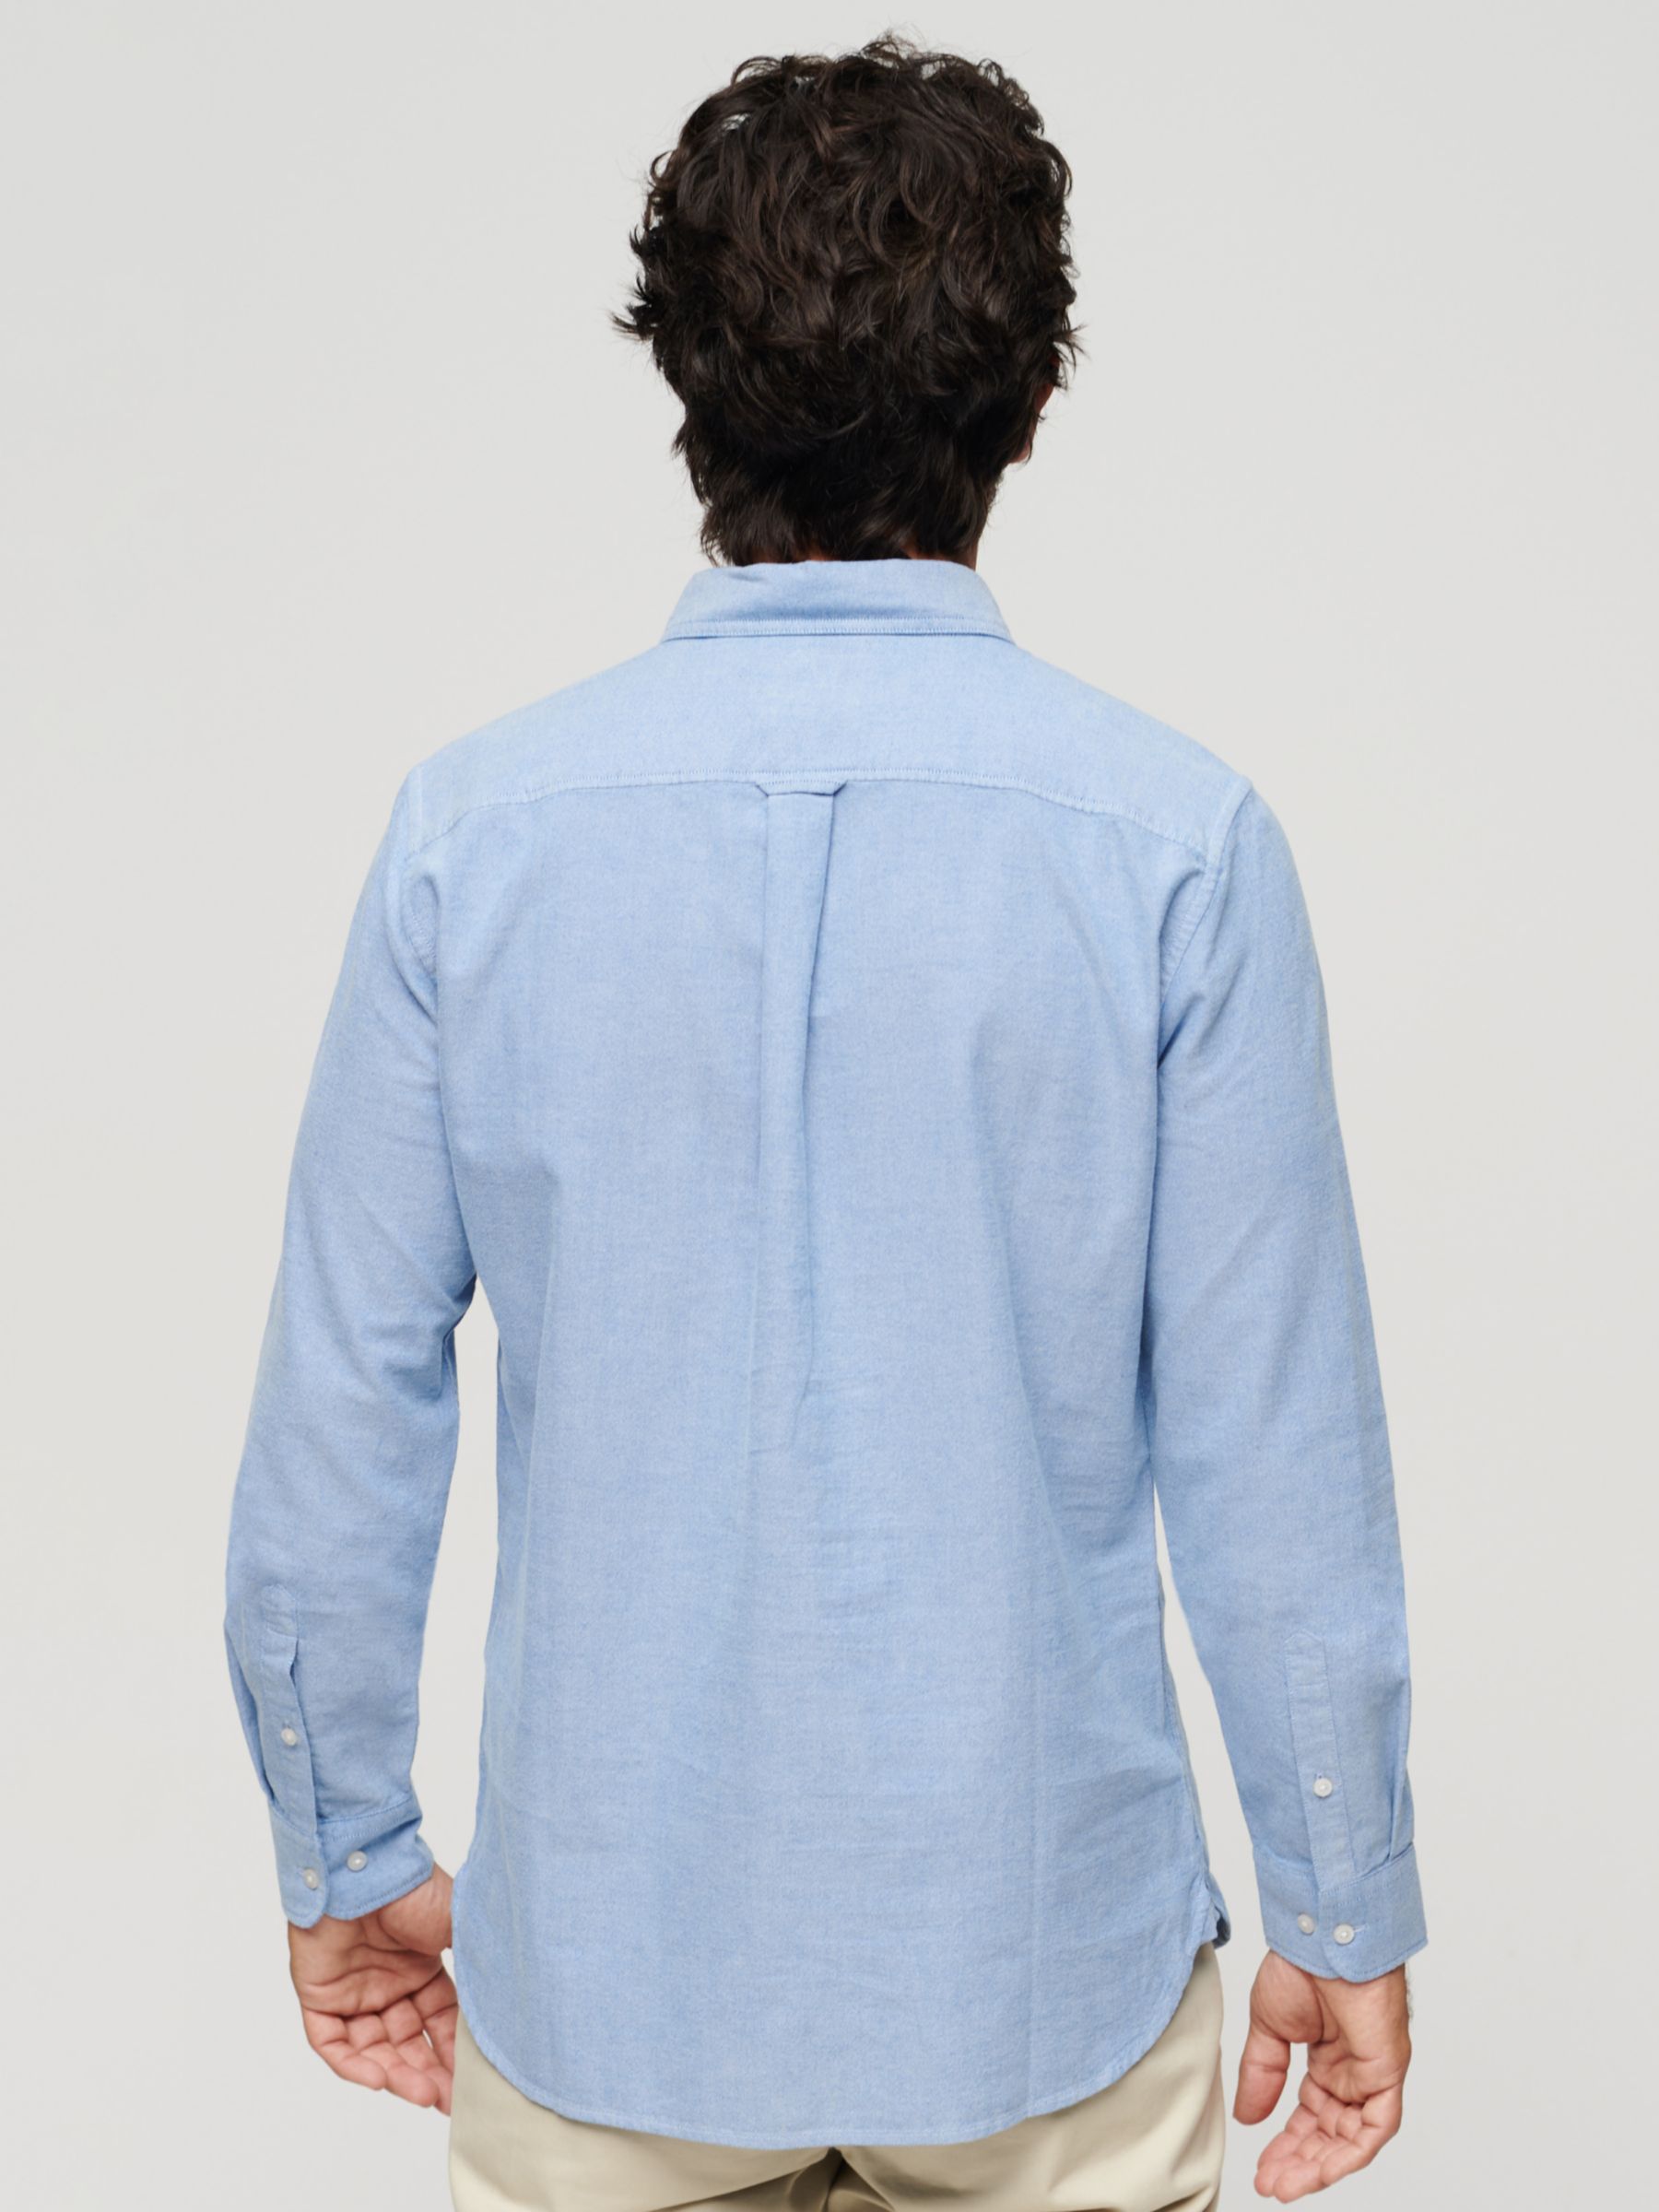 Superdry Organic Cotton Long Sleeve Oxford Shirt at John Lewis & Partners